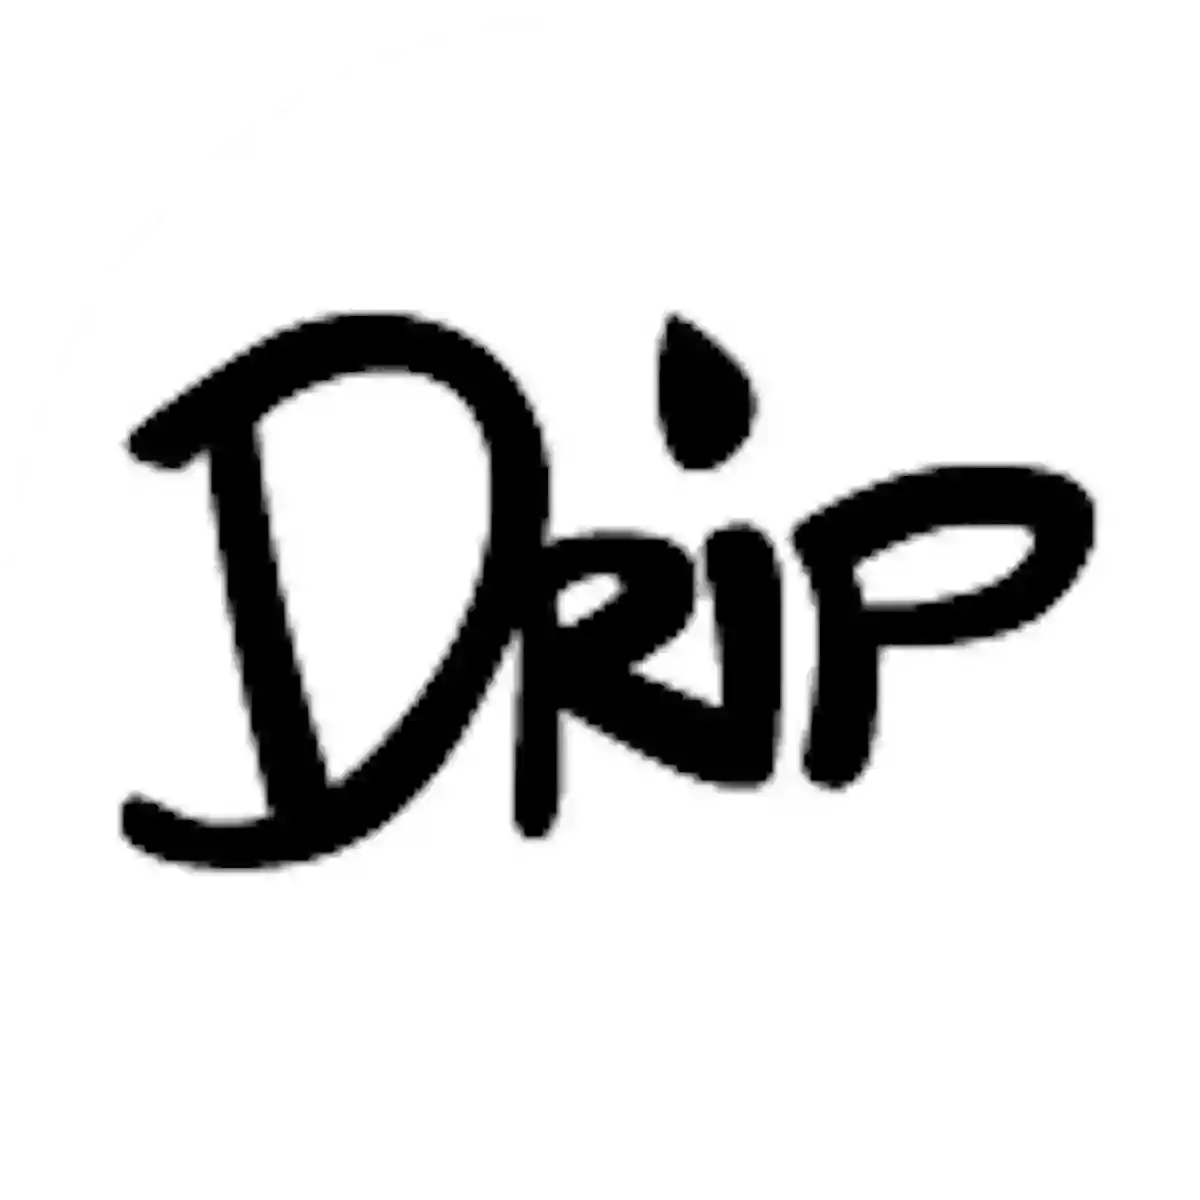 Drip